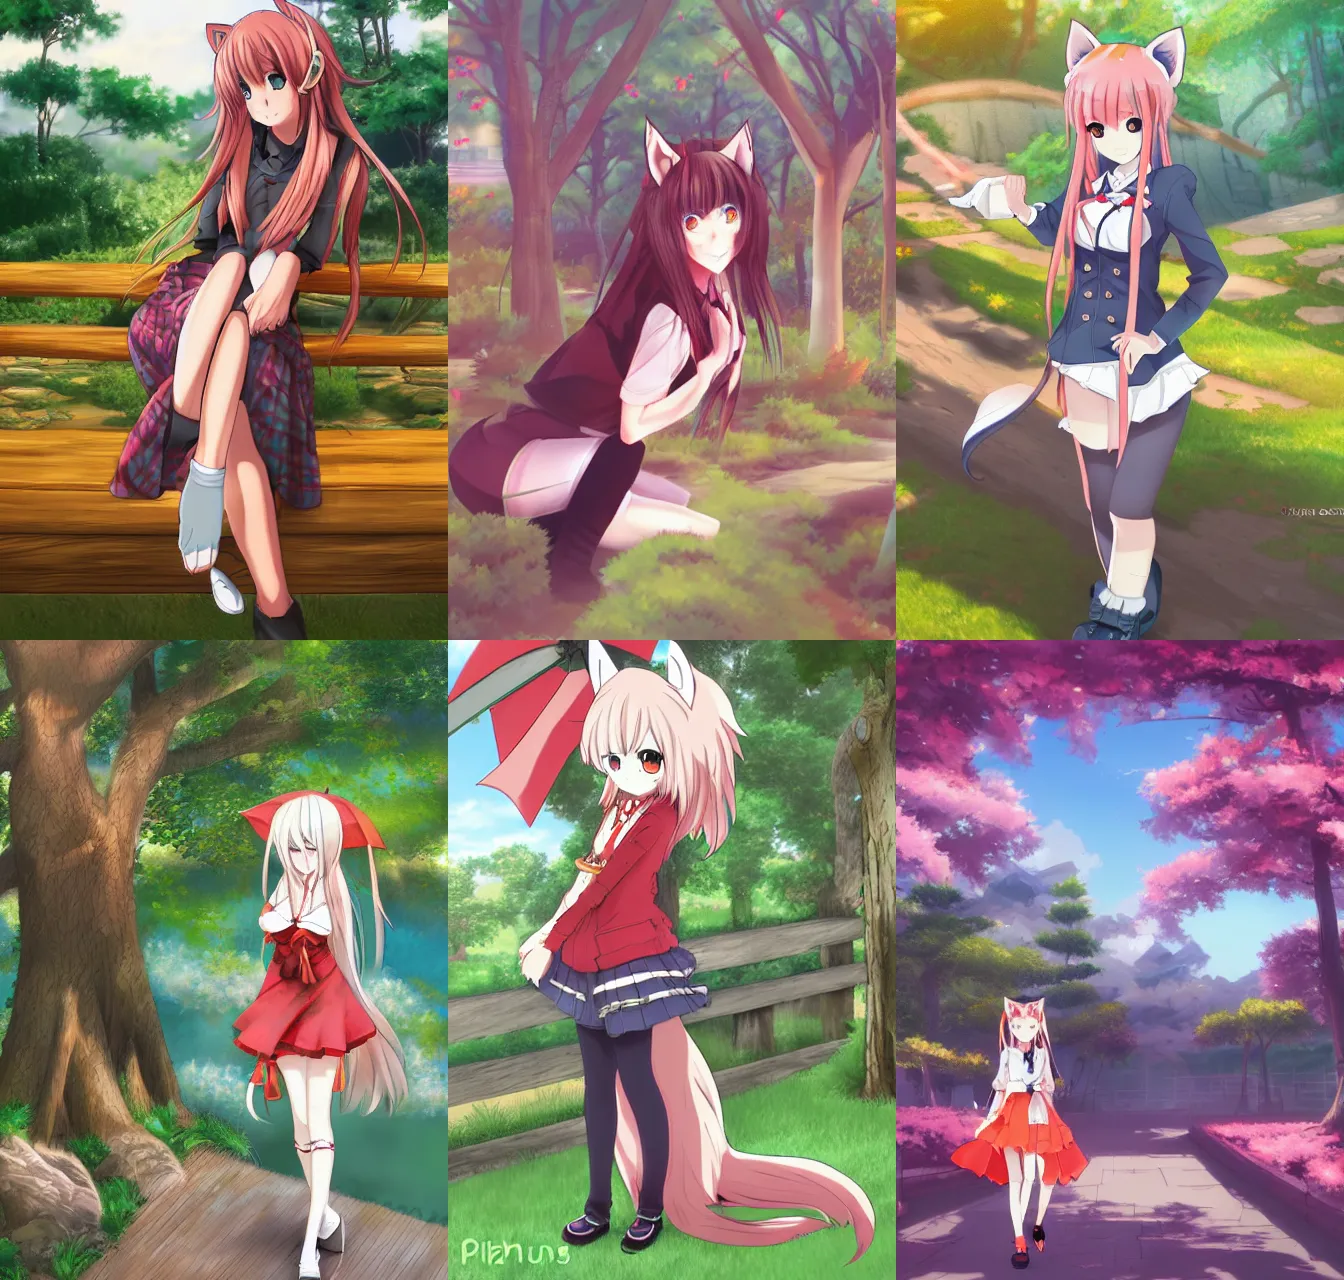 Prompt: anime foxgirl, pixiv park scenery